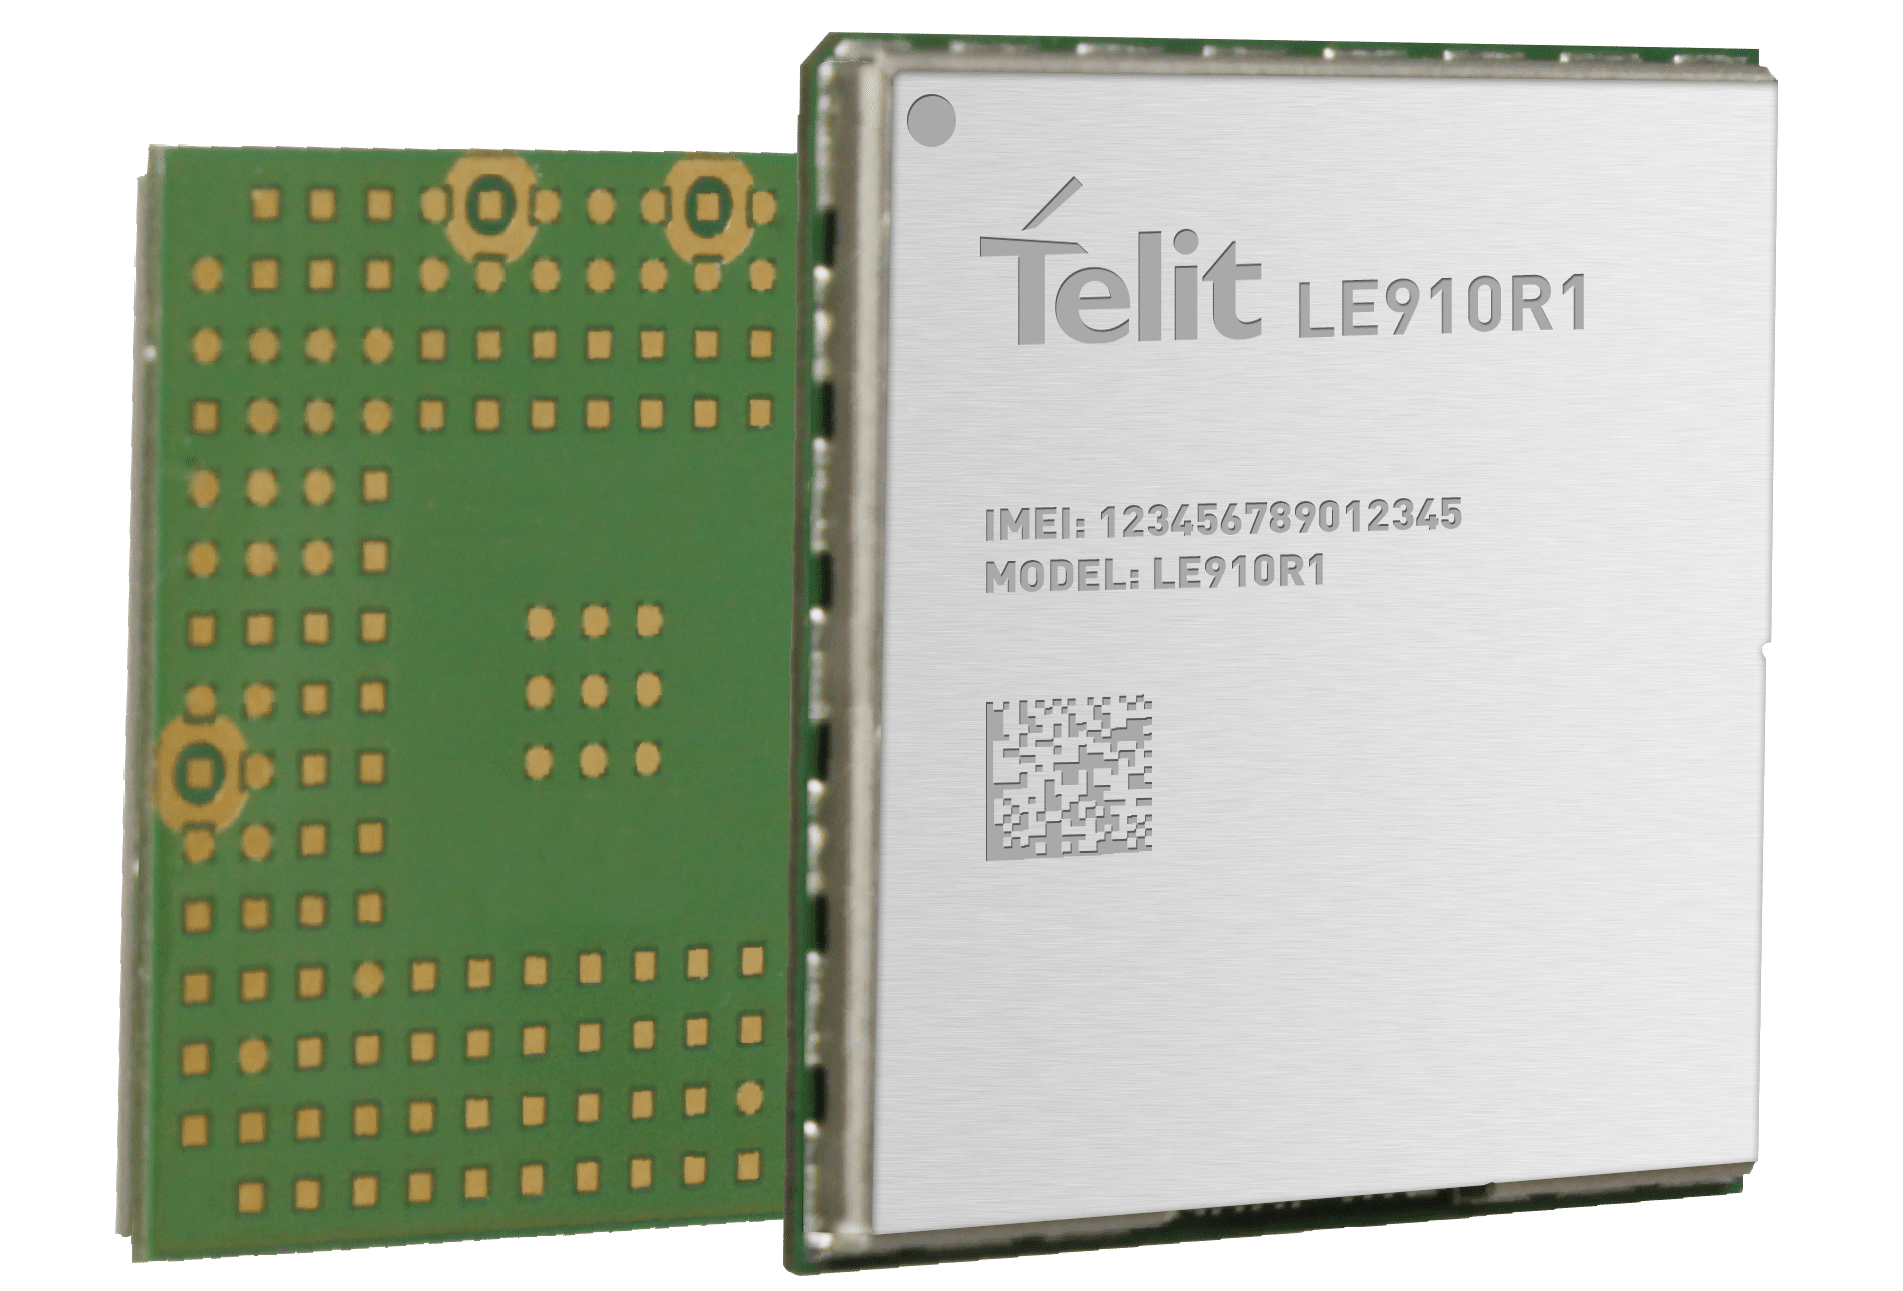 Telit's LTE Cat 1 bis microcontroller.